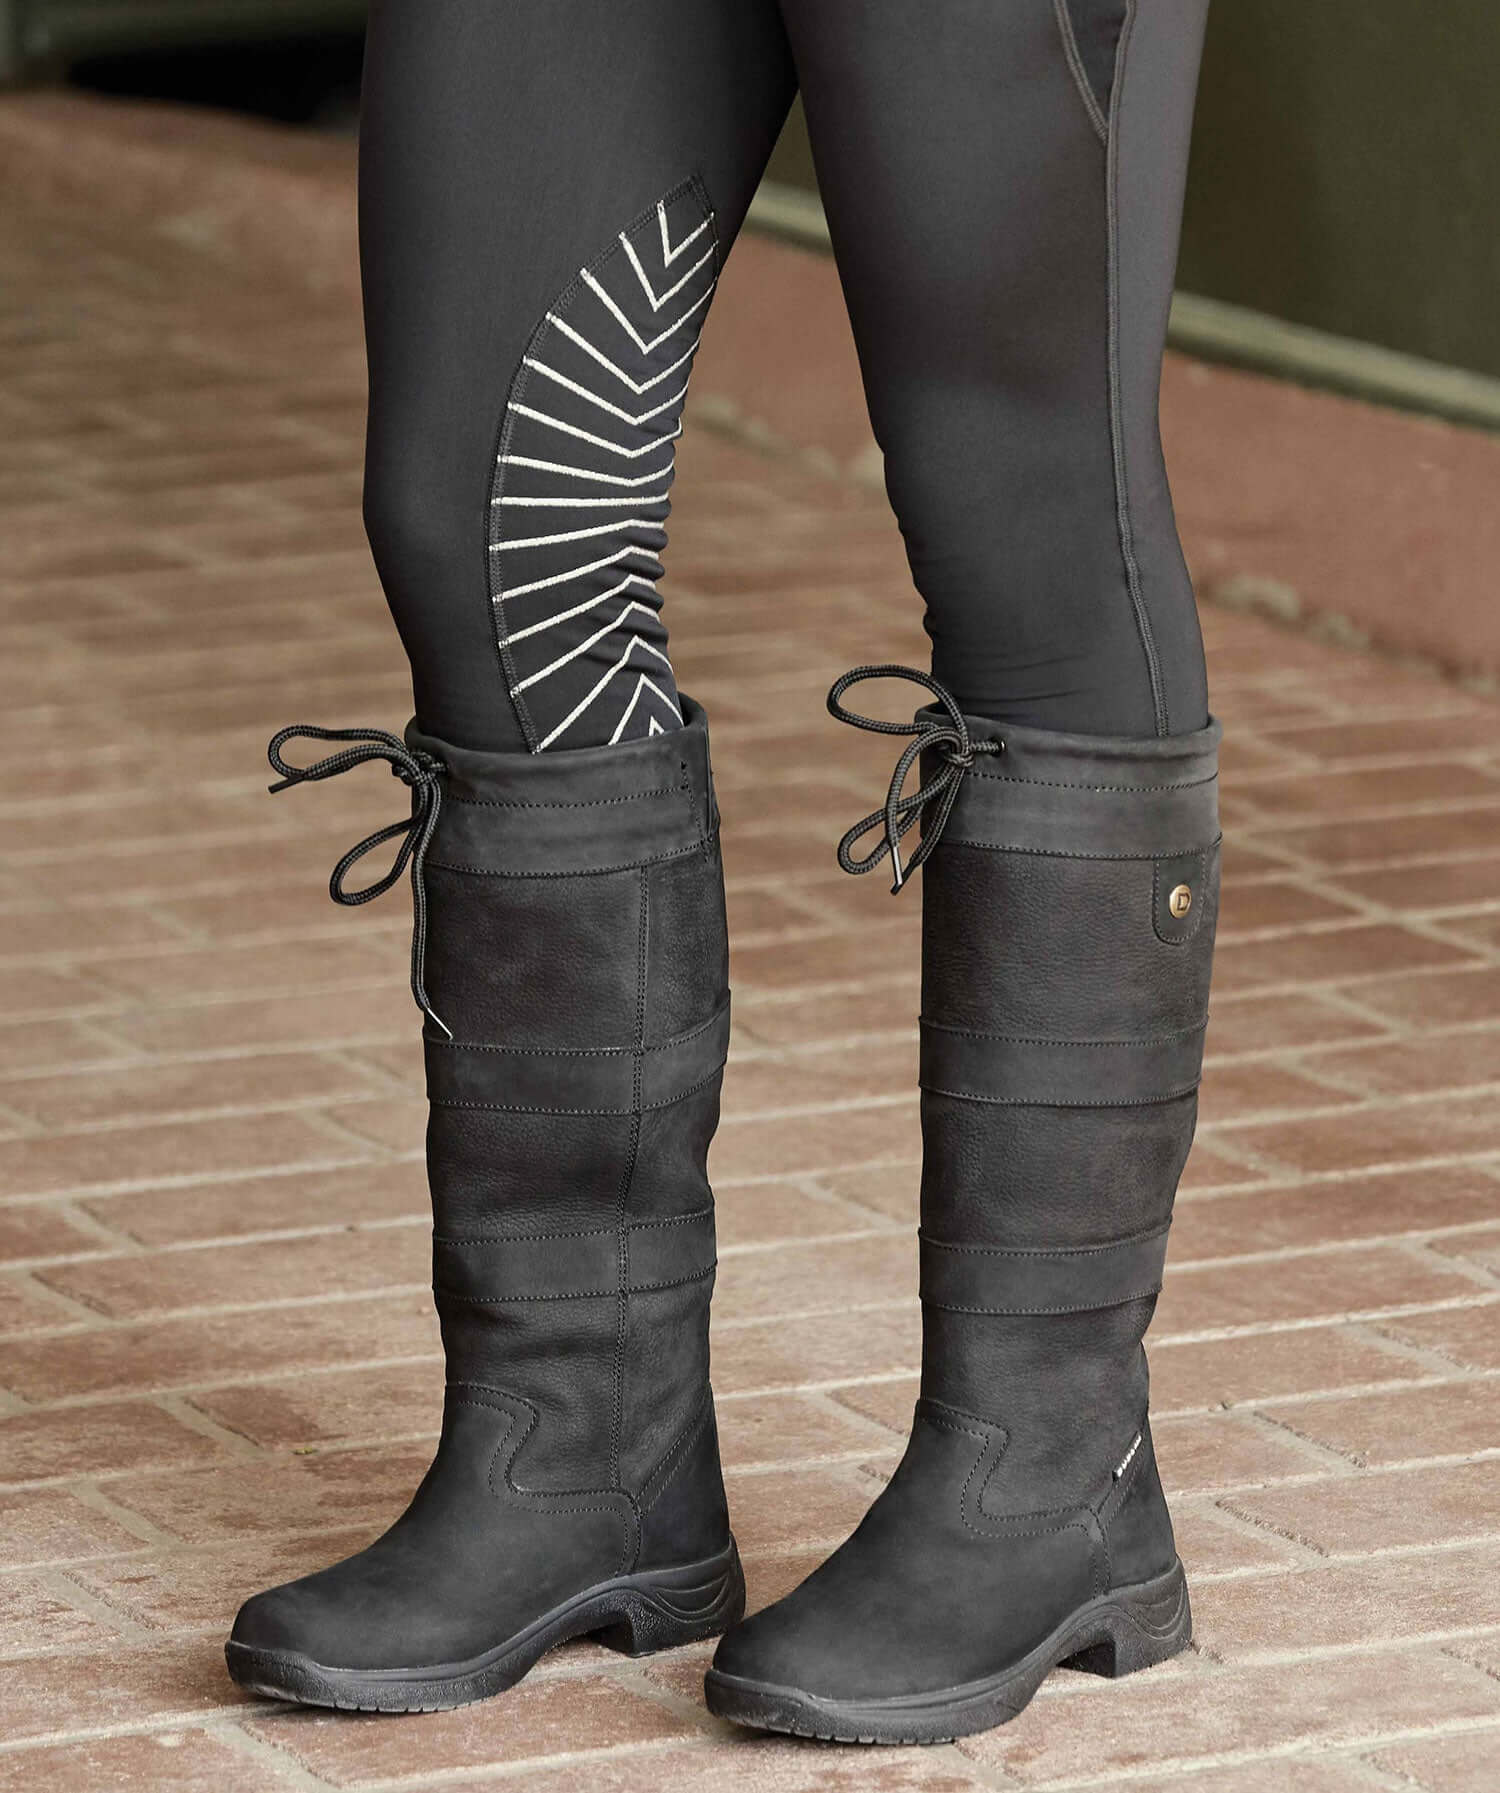 Black River III Luxury High Leg Leather Boot by Dublin 